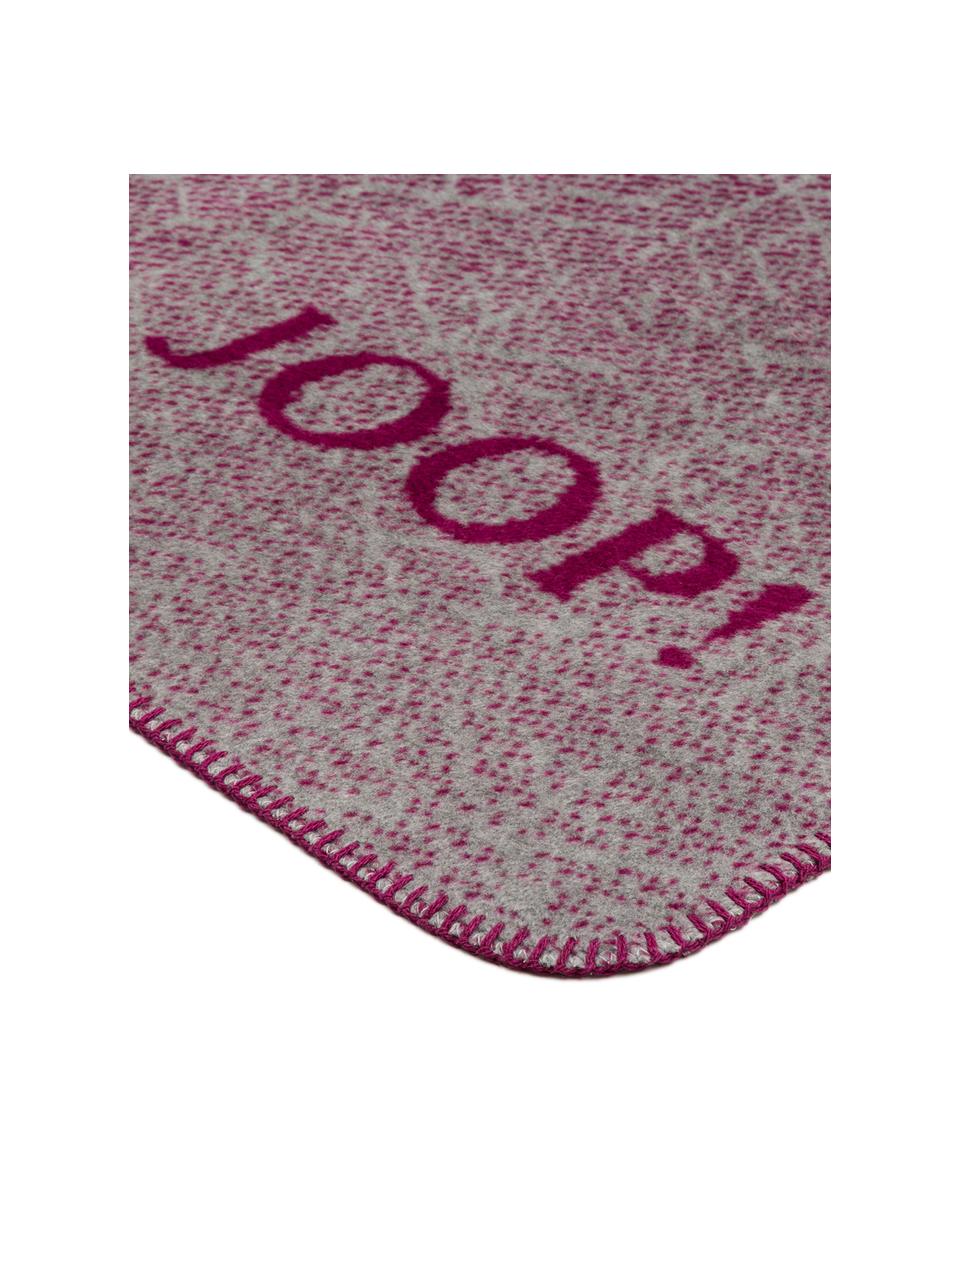 Fleece-Plaid Metric in Beere mit grafischem Muster, 58% Baumwolle, 35% Polyacryl, 7% Polyester, Beerentöne, Grau, 150 x 200 cm